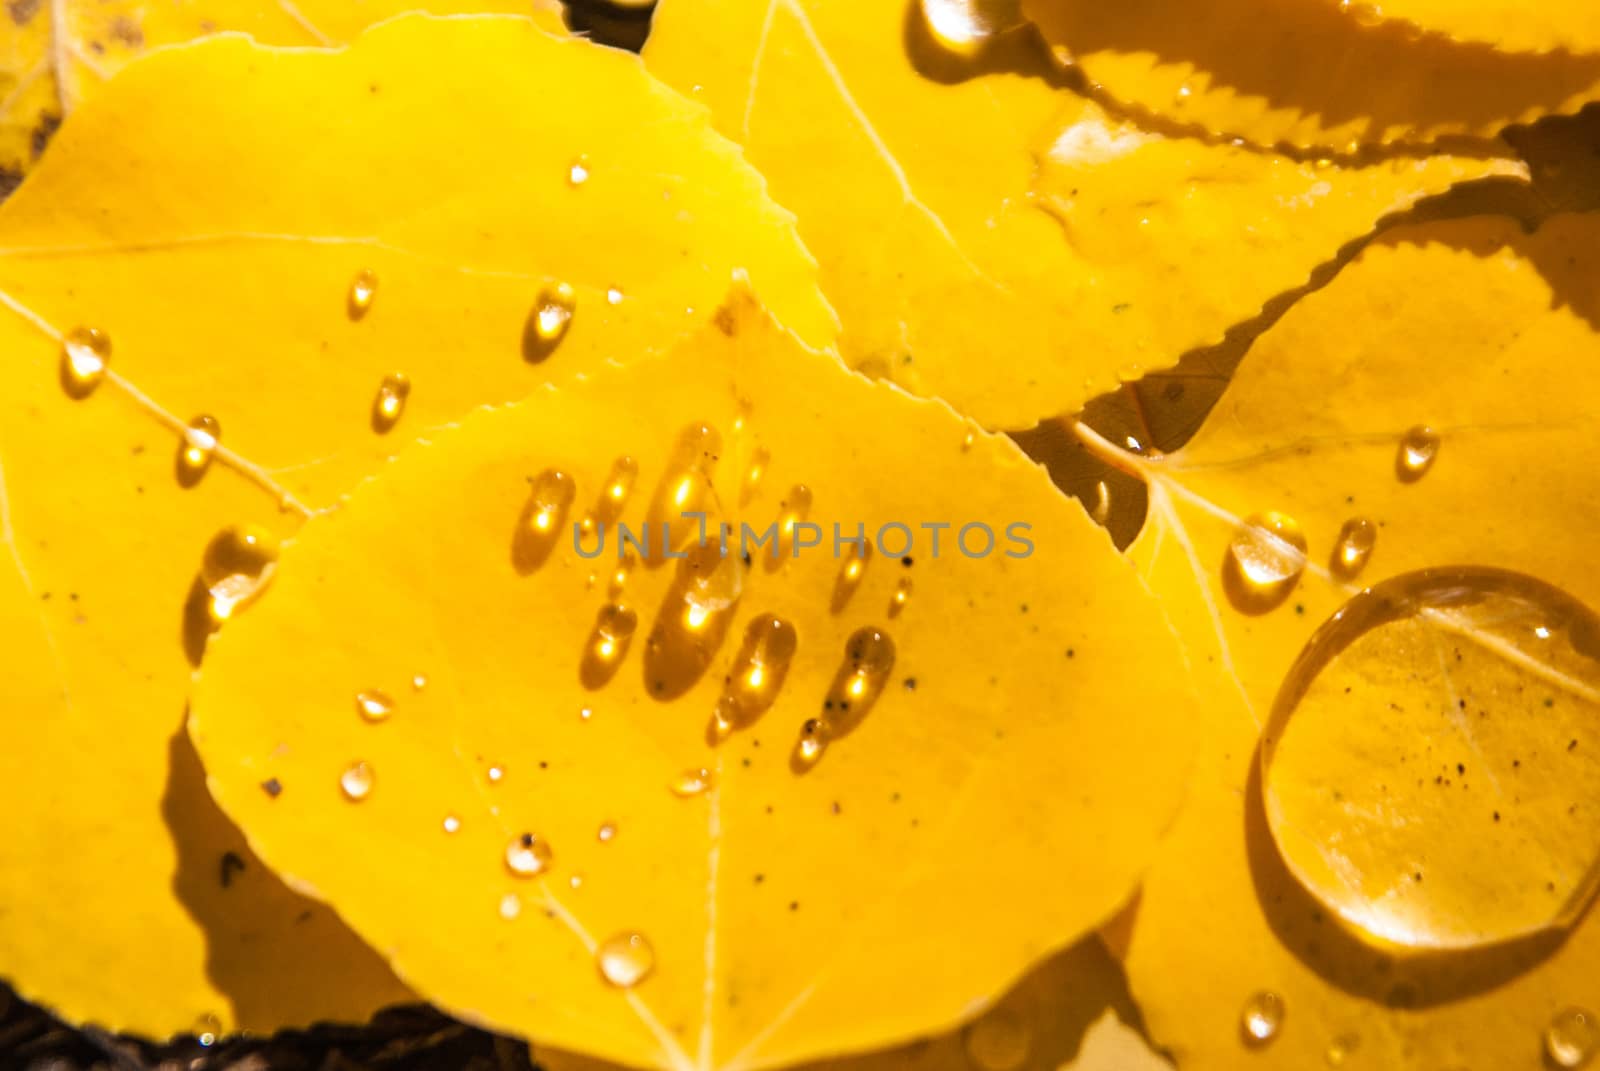 Droplets of rain on Aspen leaves by emattil